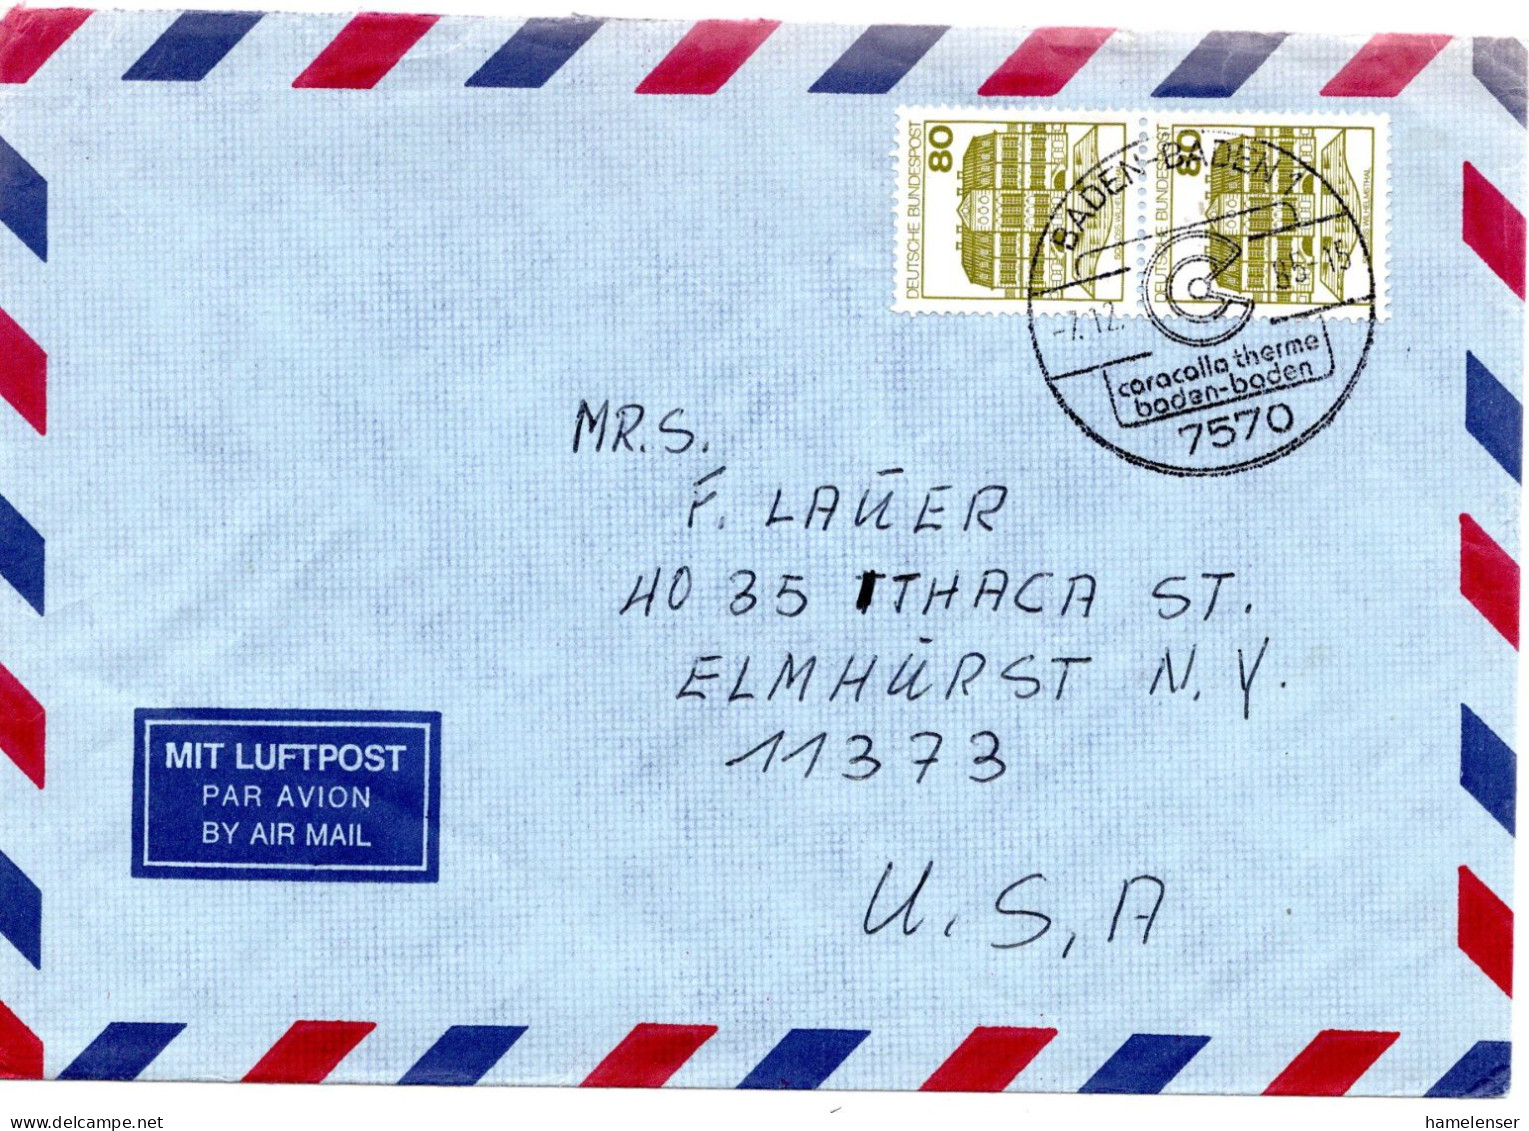 70157 - Bund - 1985 - 2@80Pfg B&S A LpBf BADEN-BADEN - ... -> Elmhurst, NY (USA) - Covers & Documents